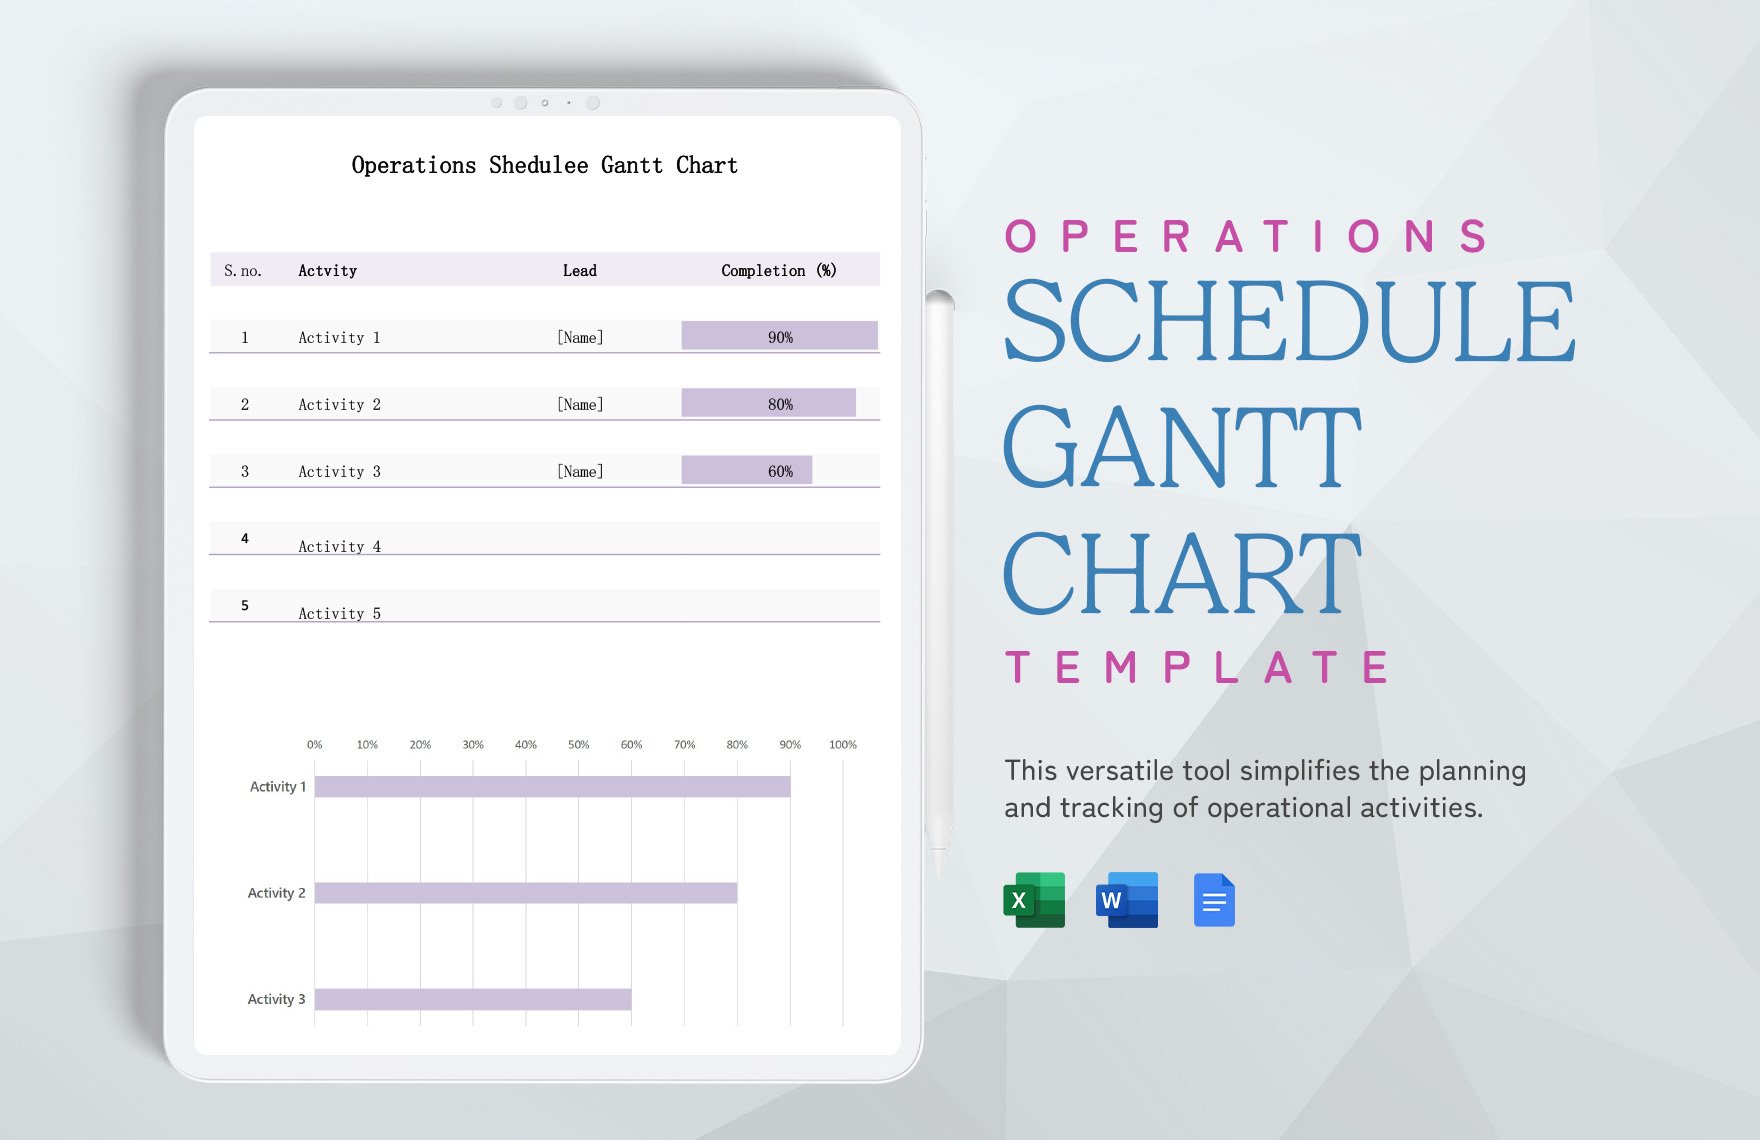 Operations Schedule Gantt Chart Template in Word, Google Docs, Excel